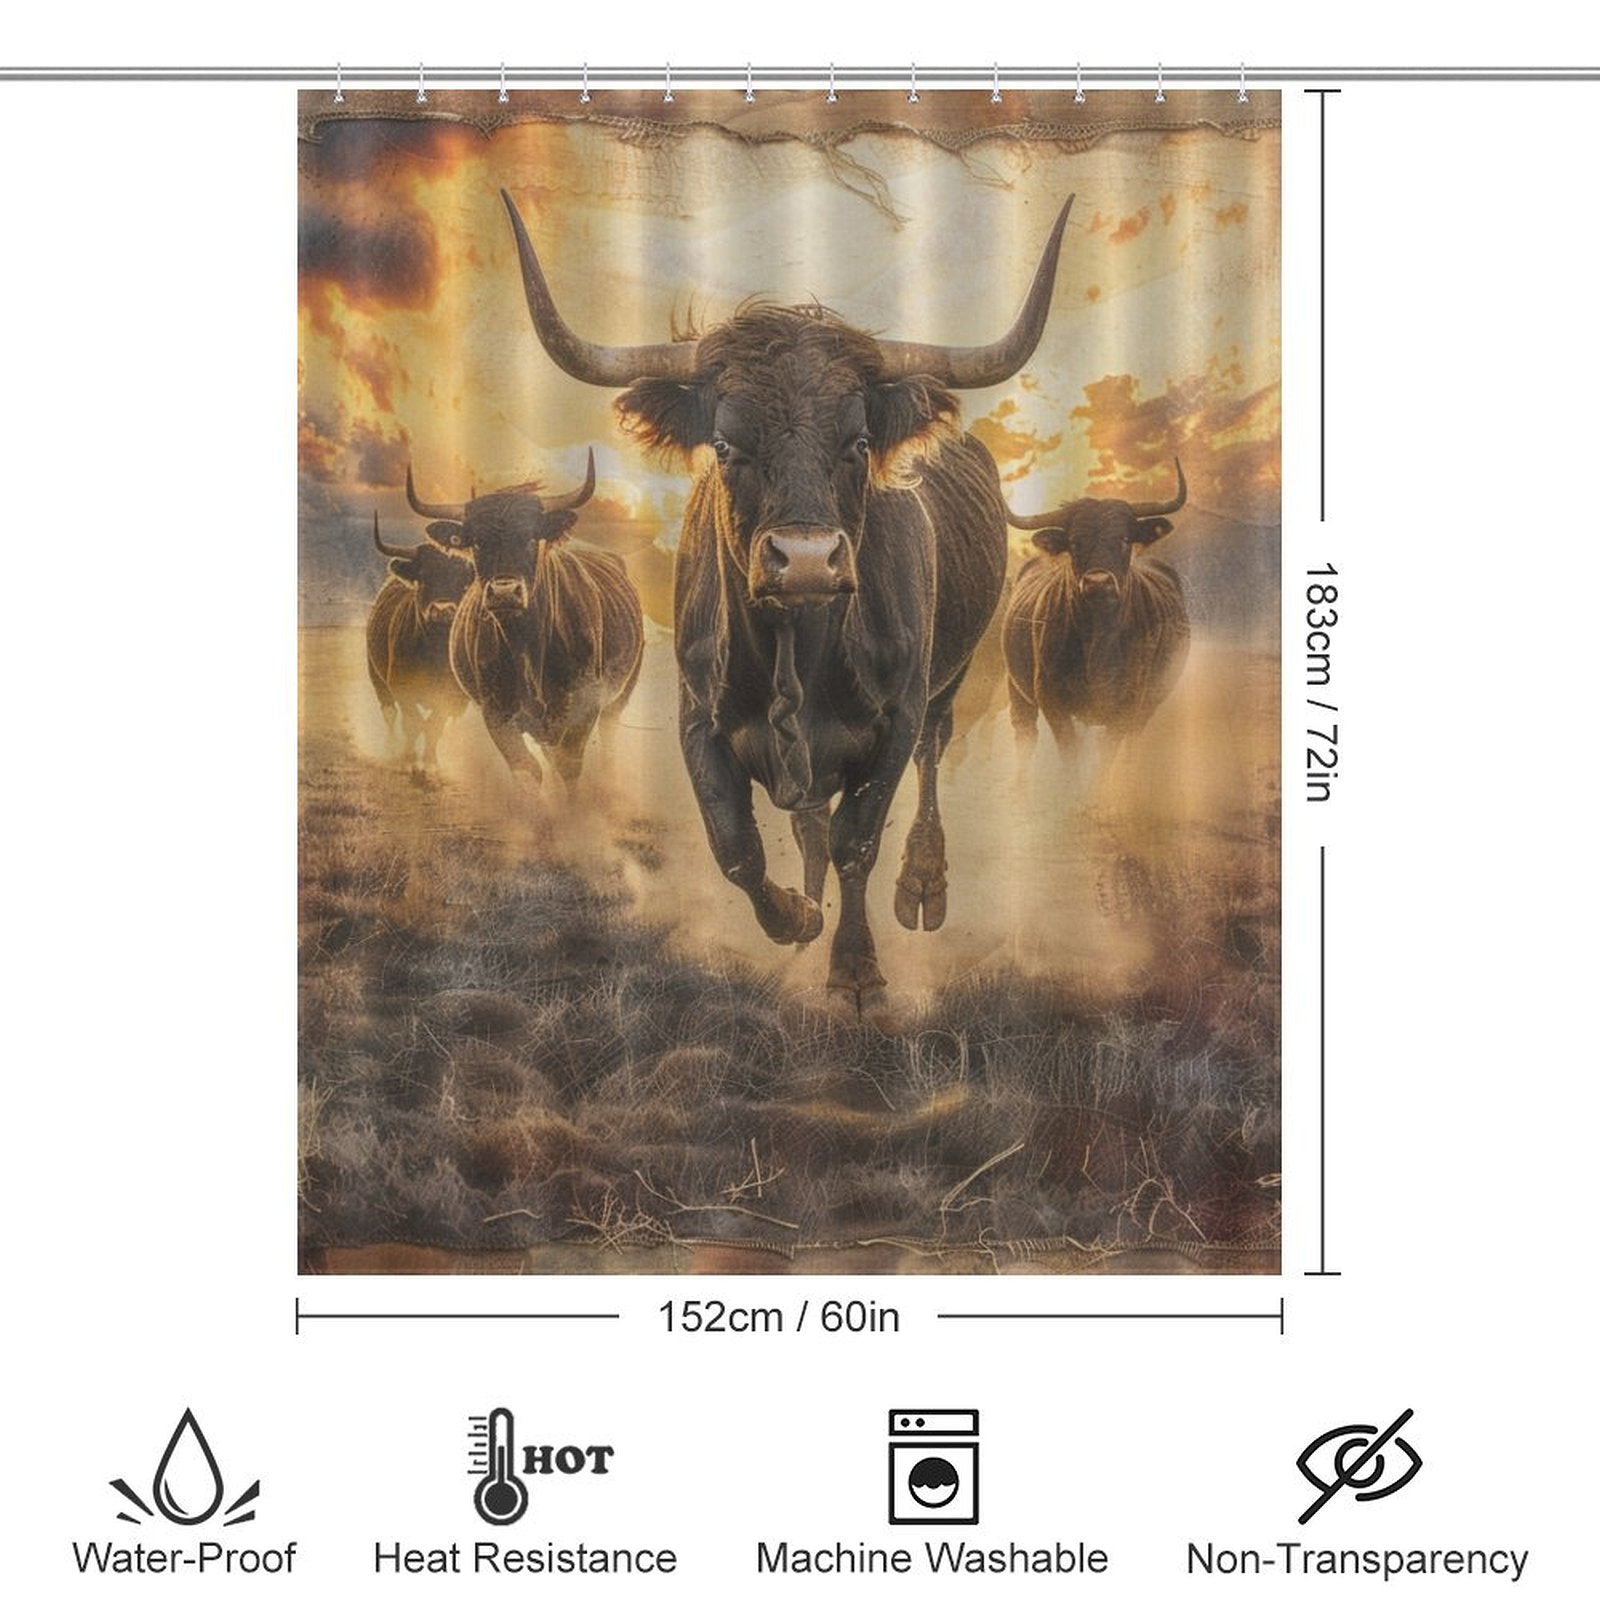 Wild West Tribute Bull Shower Curtain